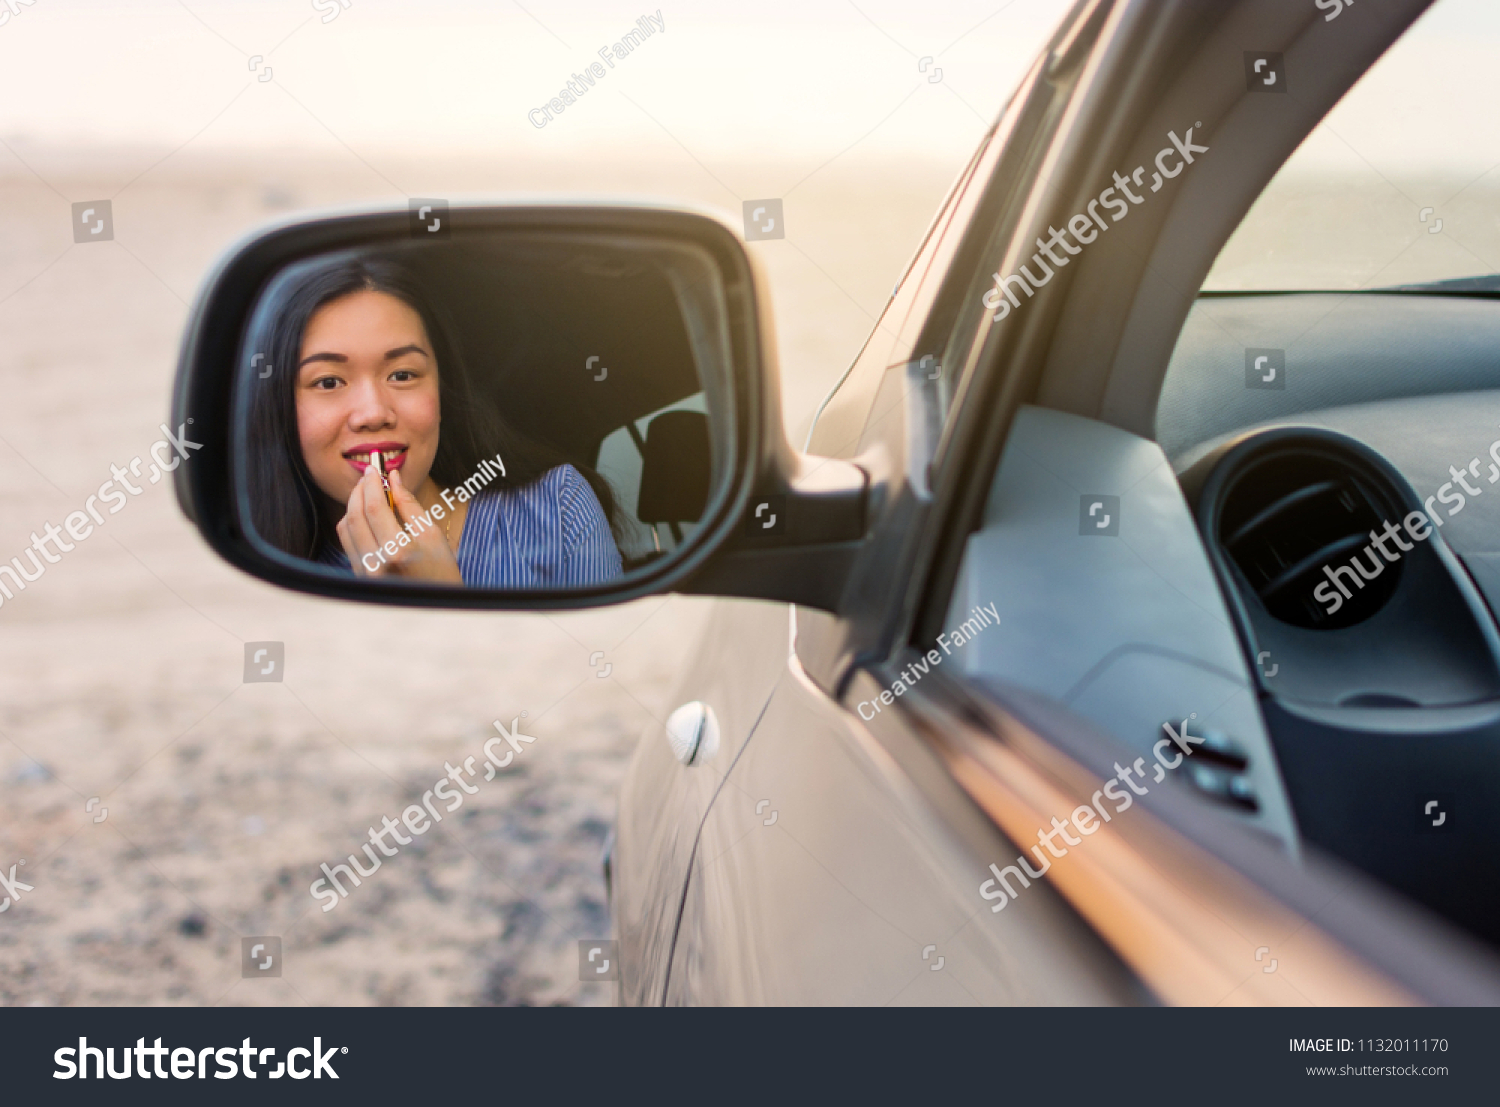 Female driver applying lipstick using rear mirror in a car #1132011170